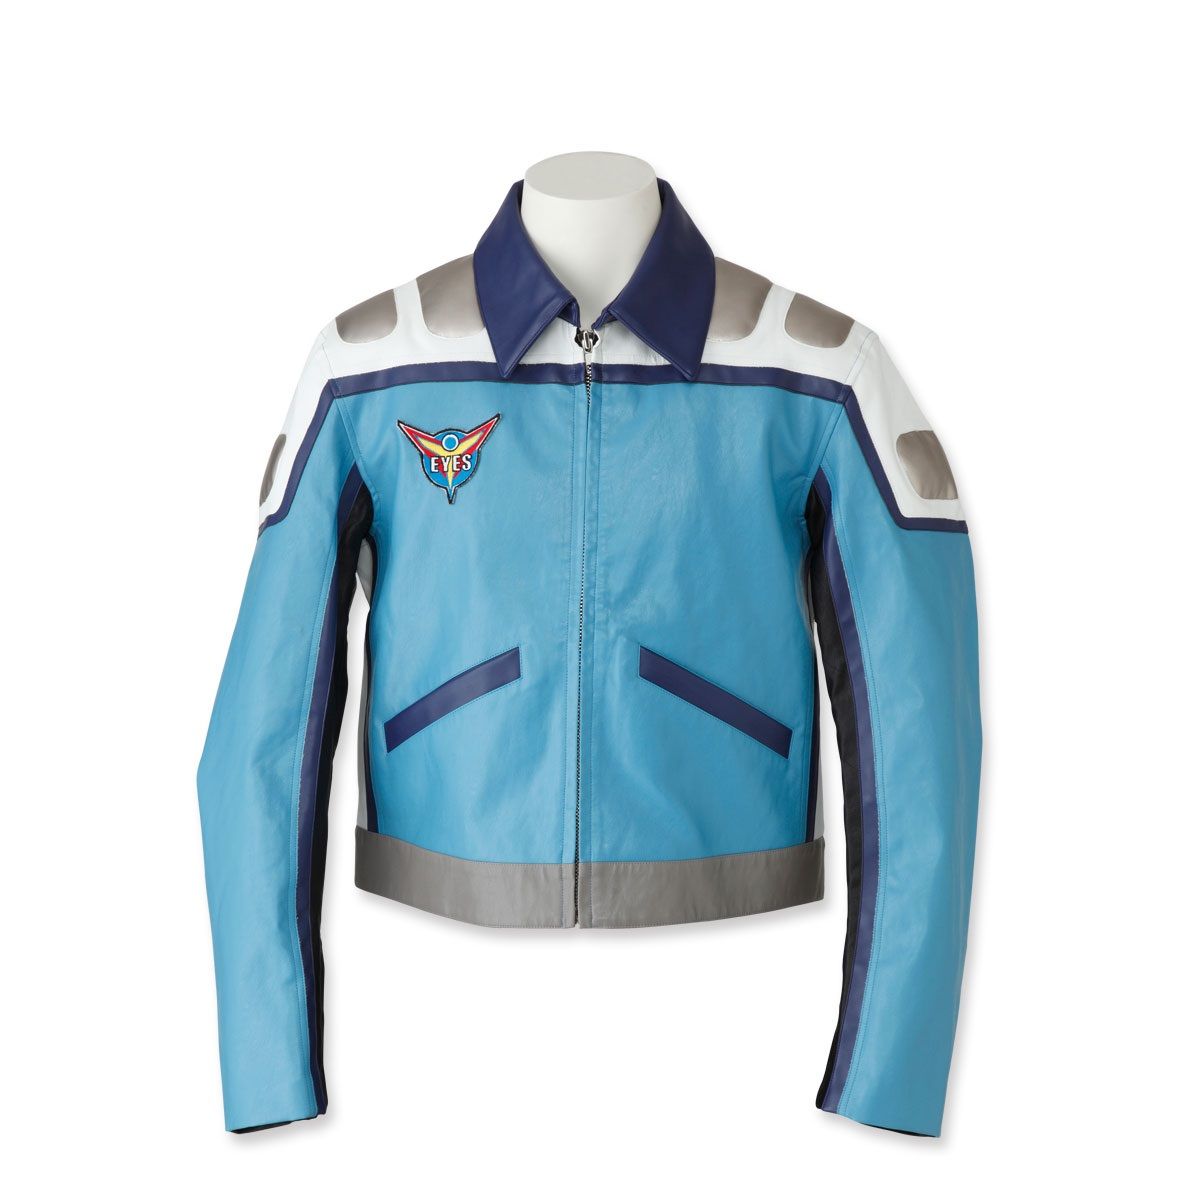 Ultraman Cosmos TEAM EYES  Uniform Jacket